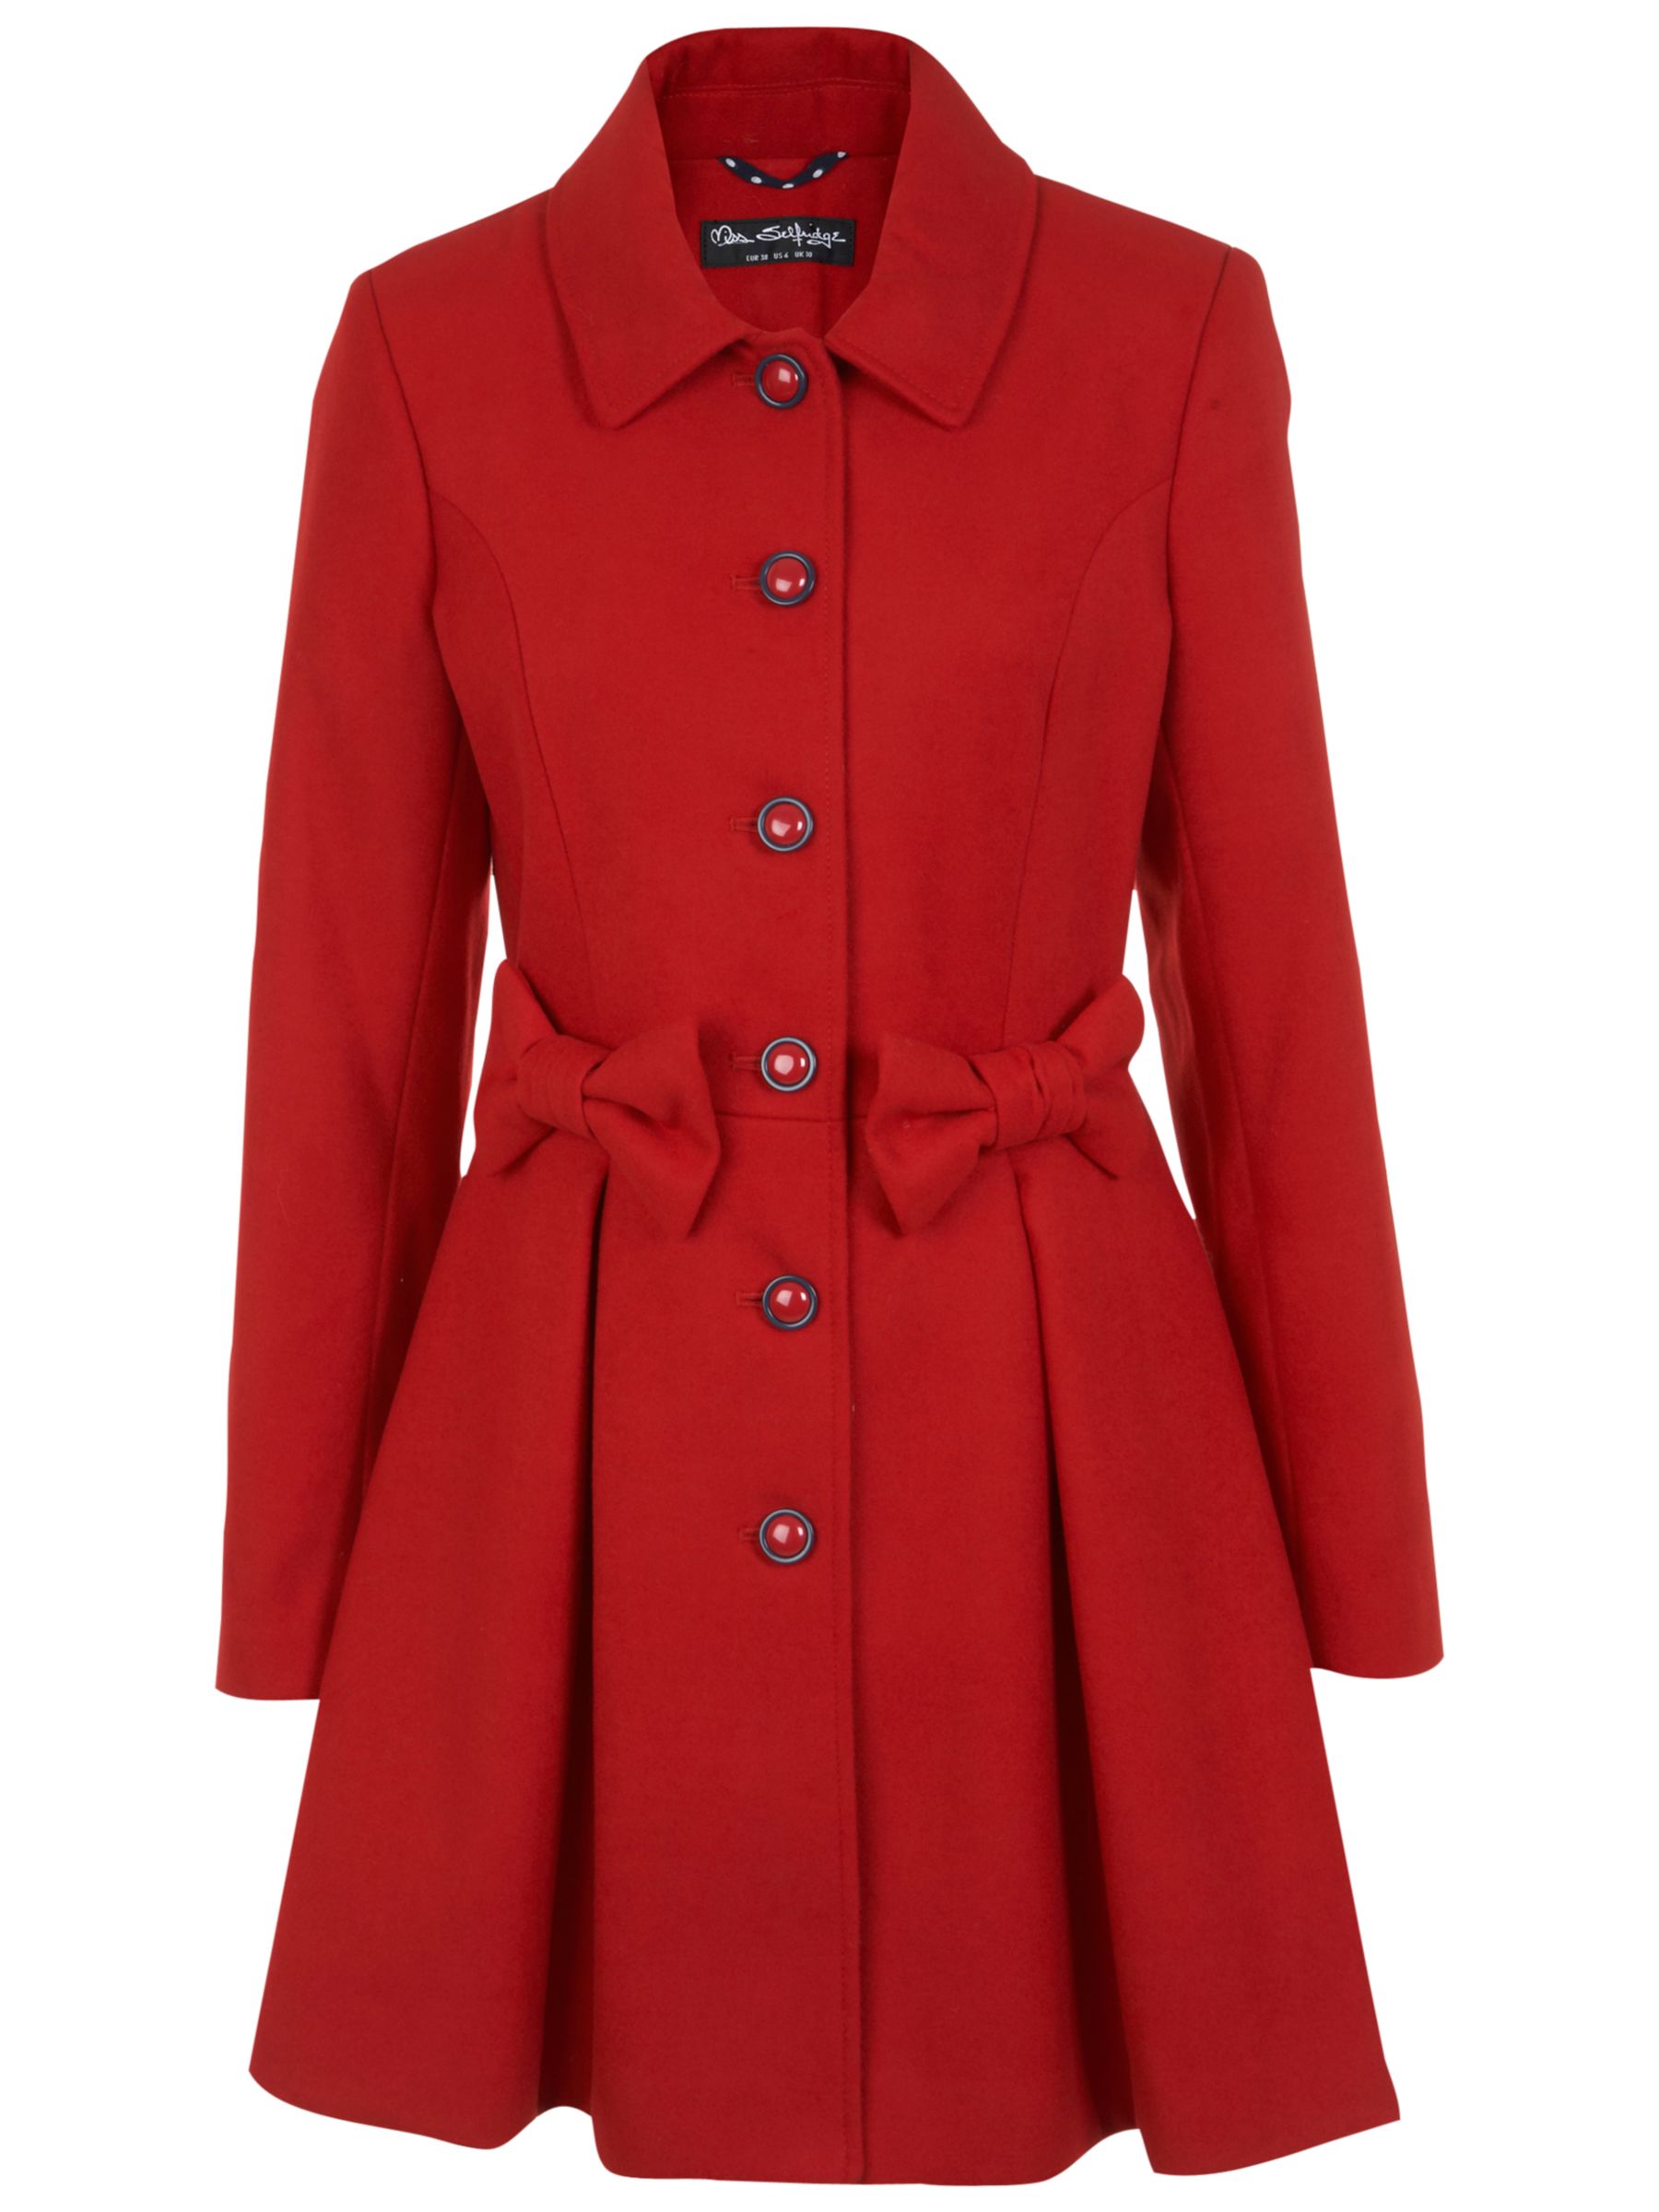 Miss Selfridge Bow Detail Coat, Red at John Lewis & Partners